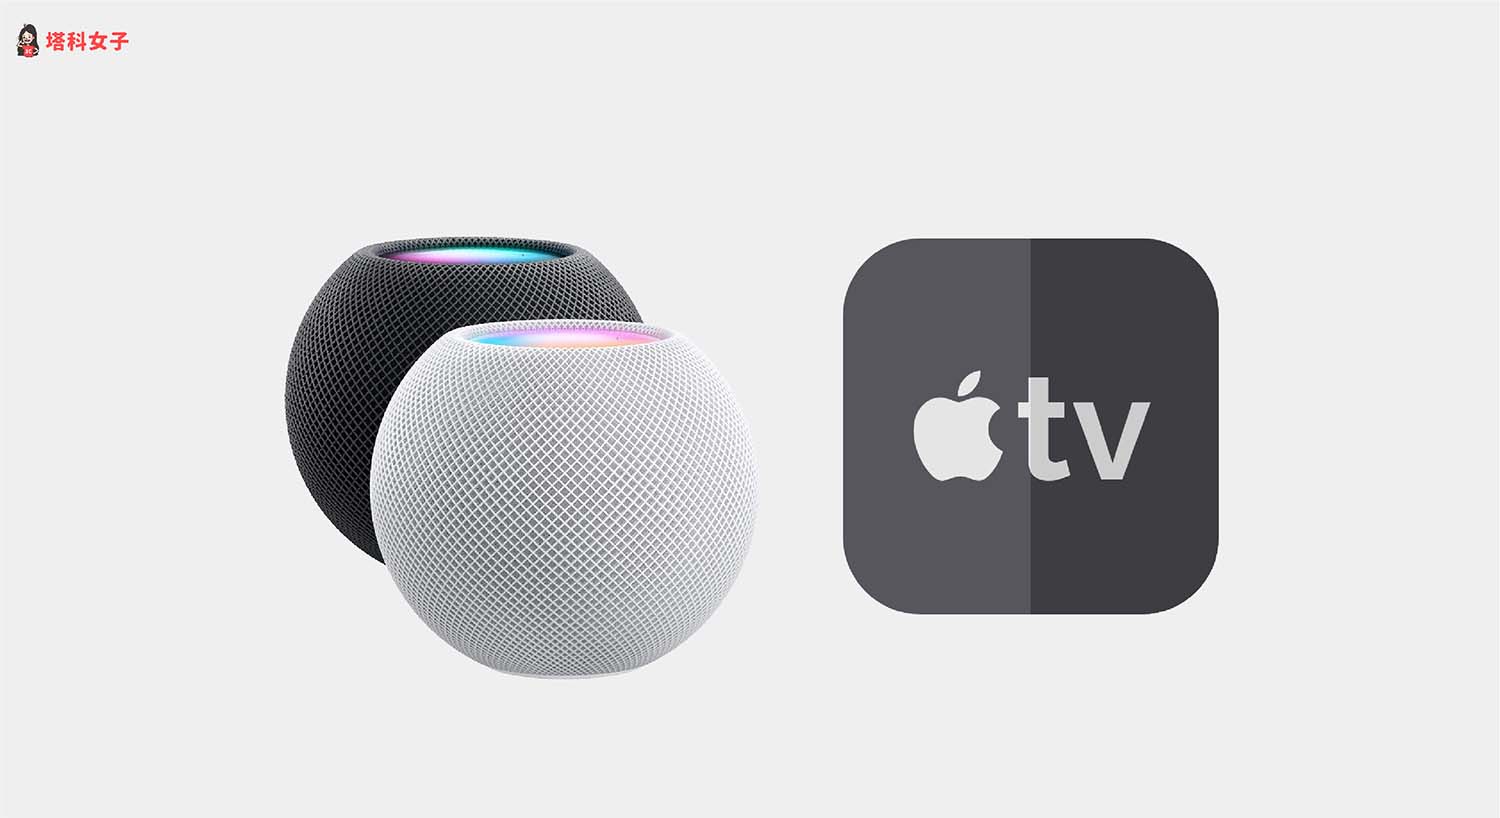 Apple TV 4K 如何將 HomePod / HomePod mini 設為音訊輸出裝置